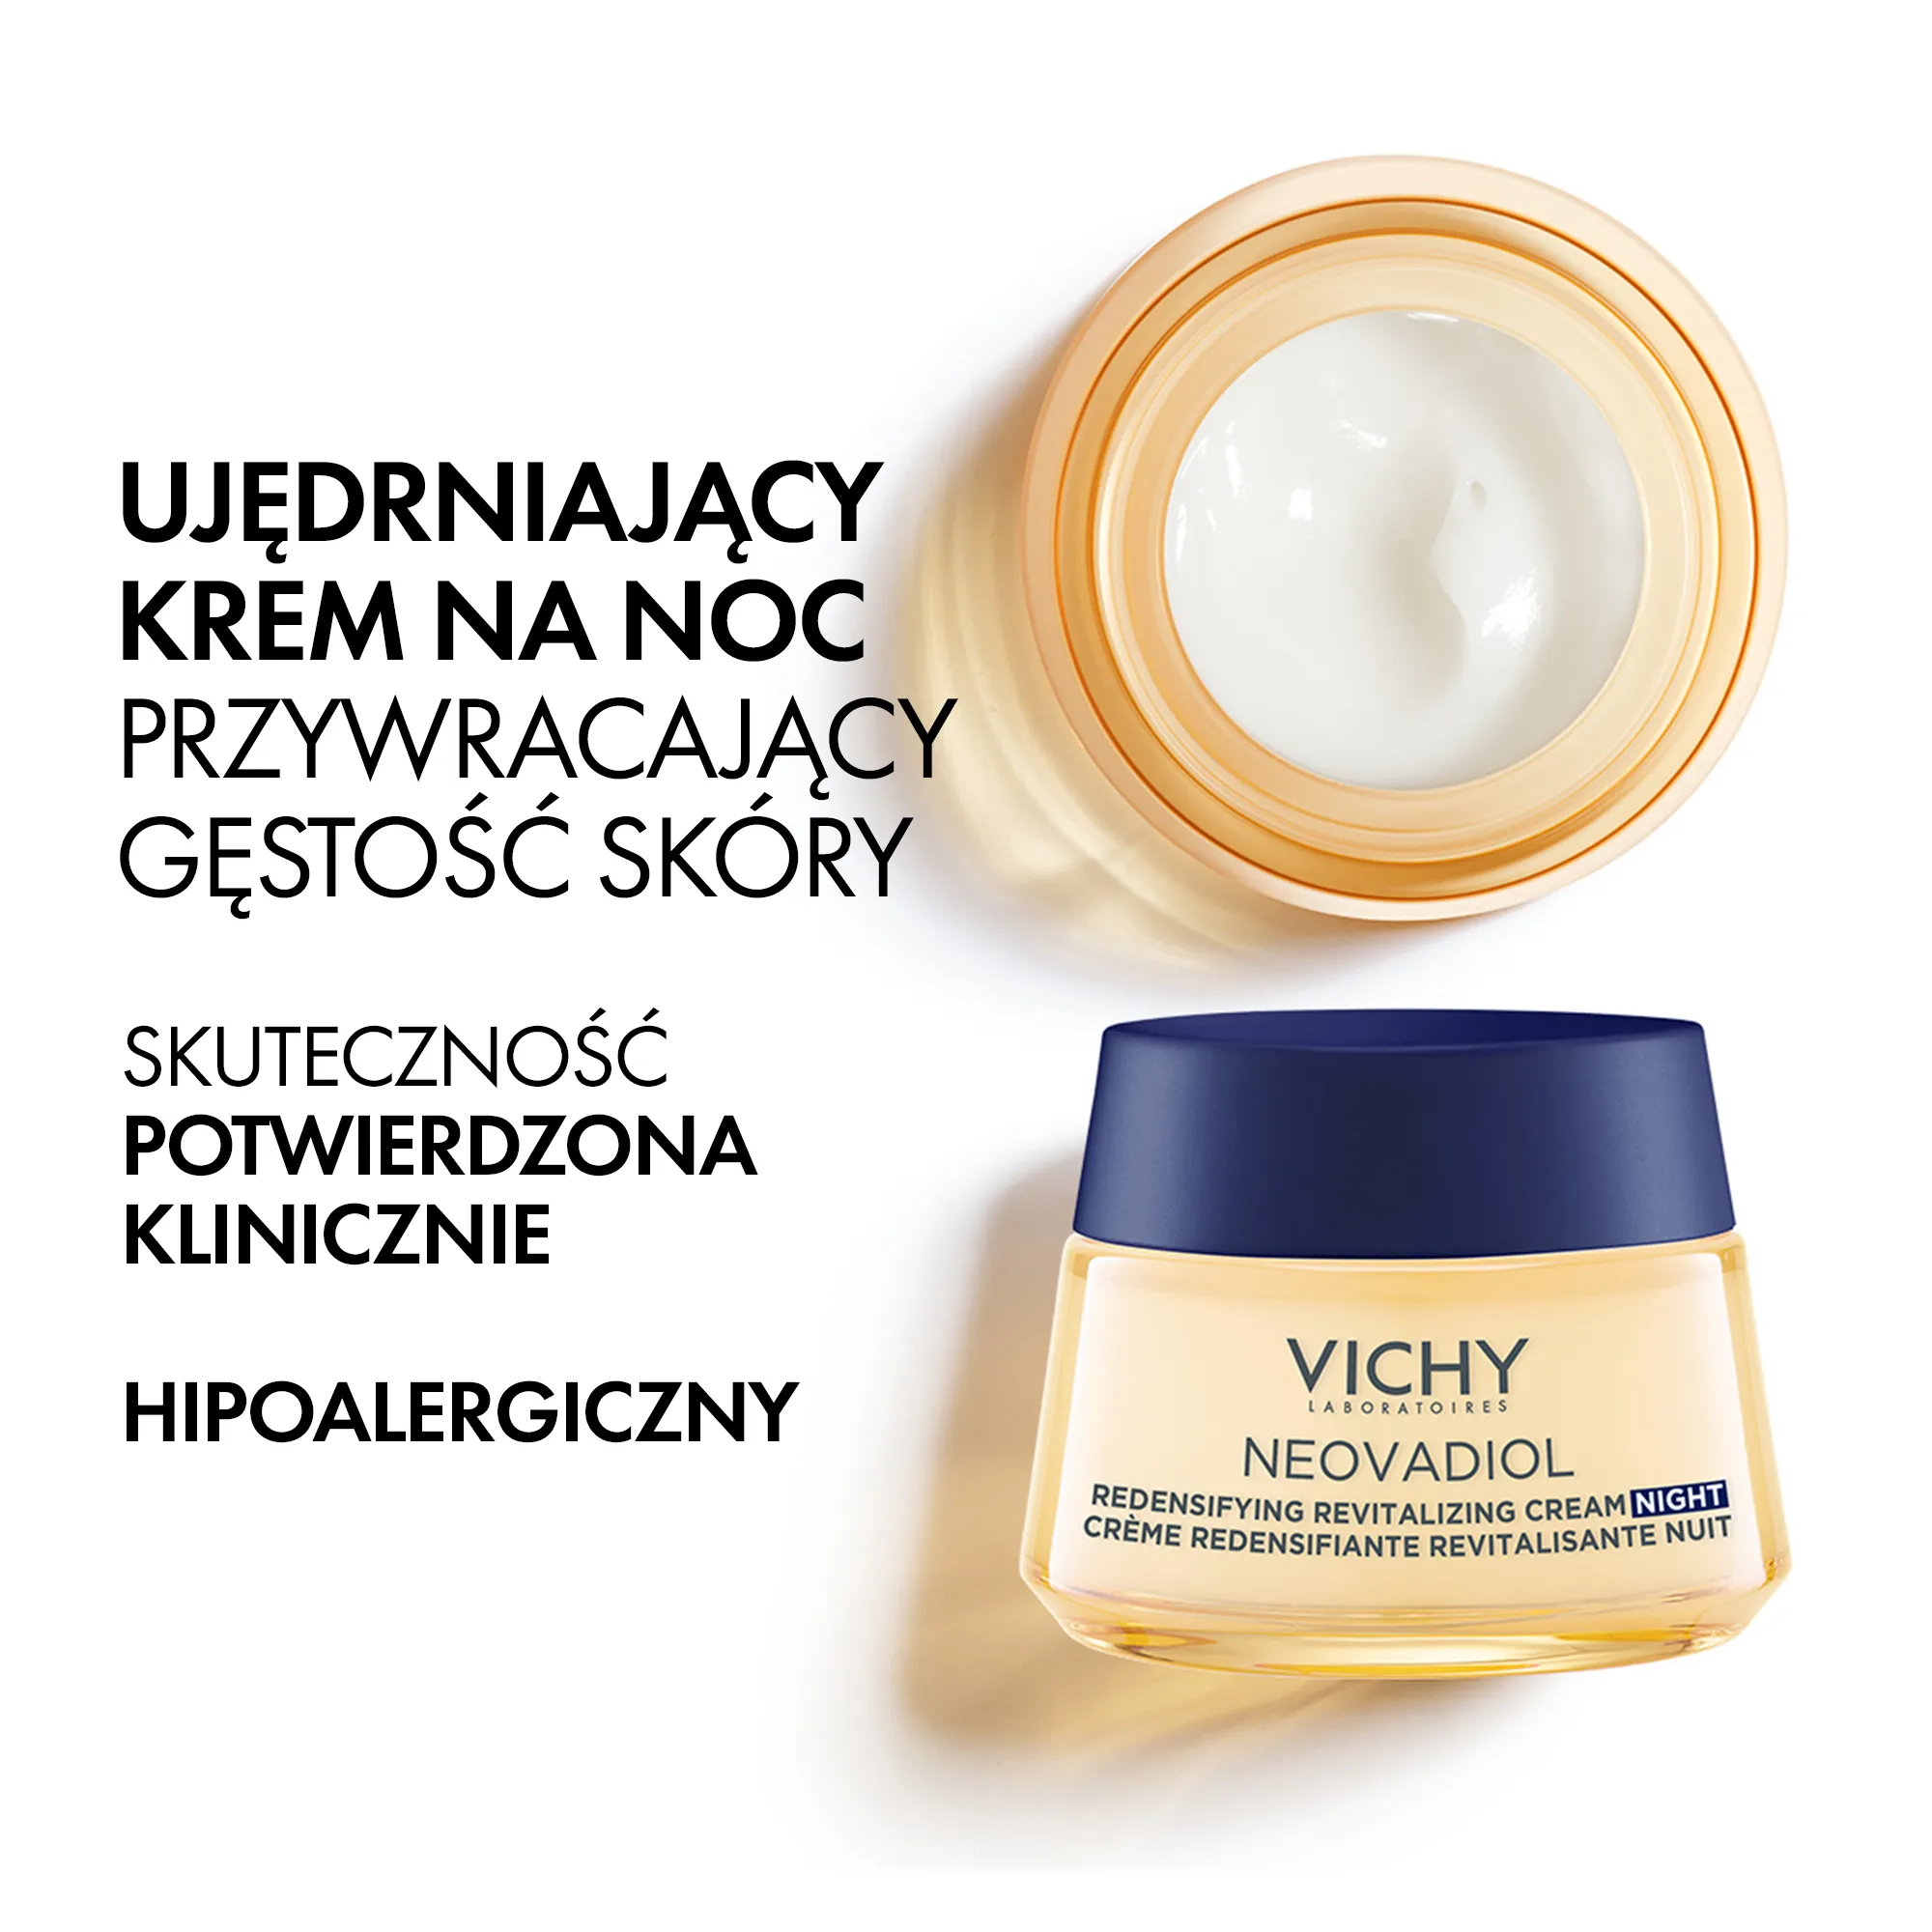 Vichy Neovadiol Peri-Menopause Krem ujędrniający na noc, 50 ml 